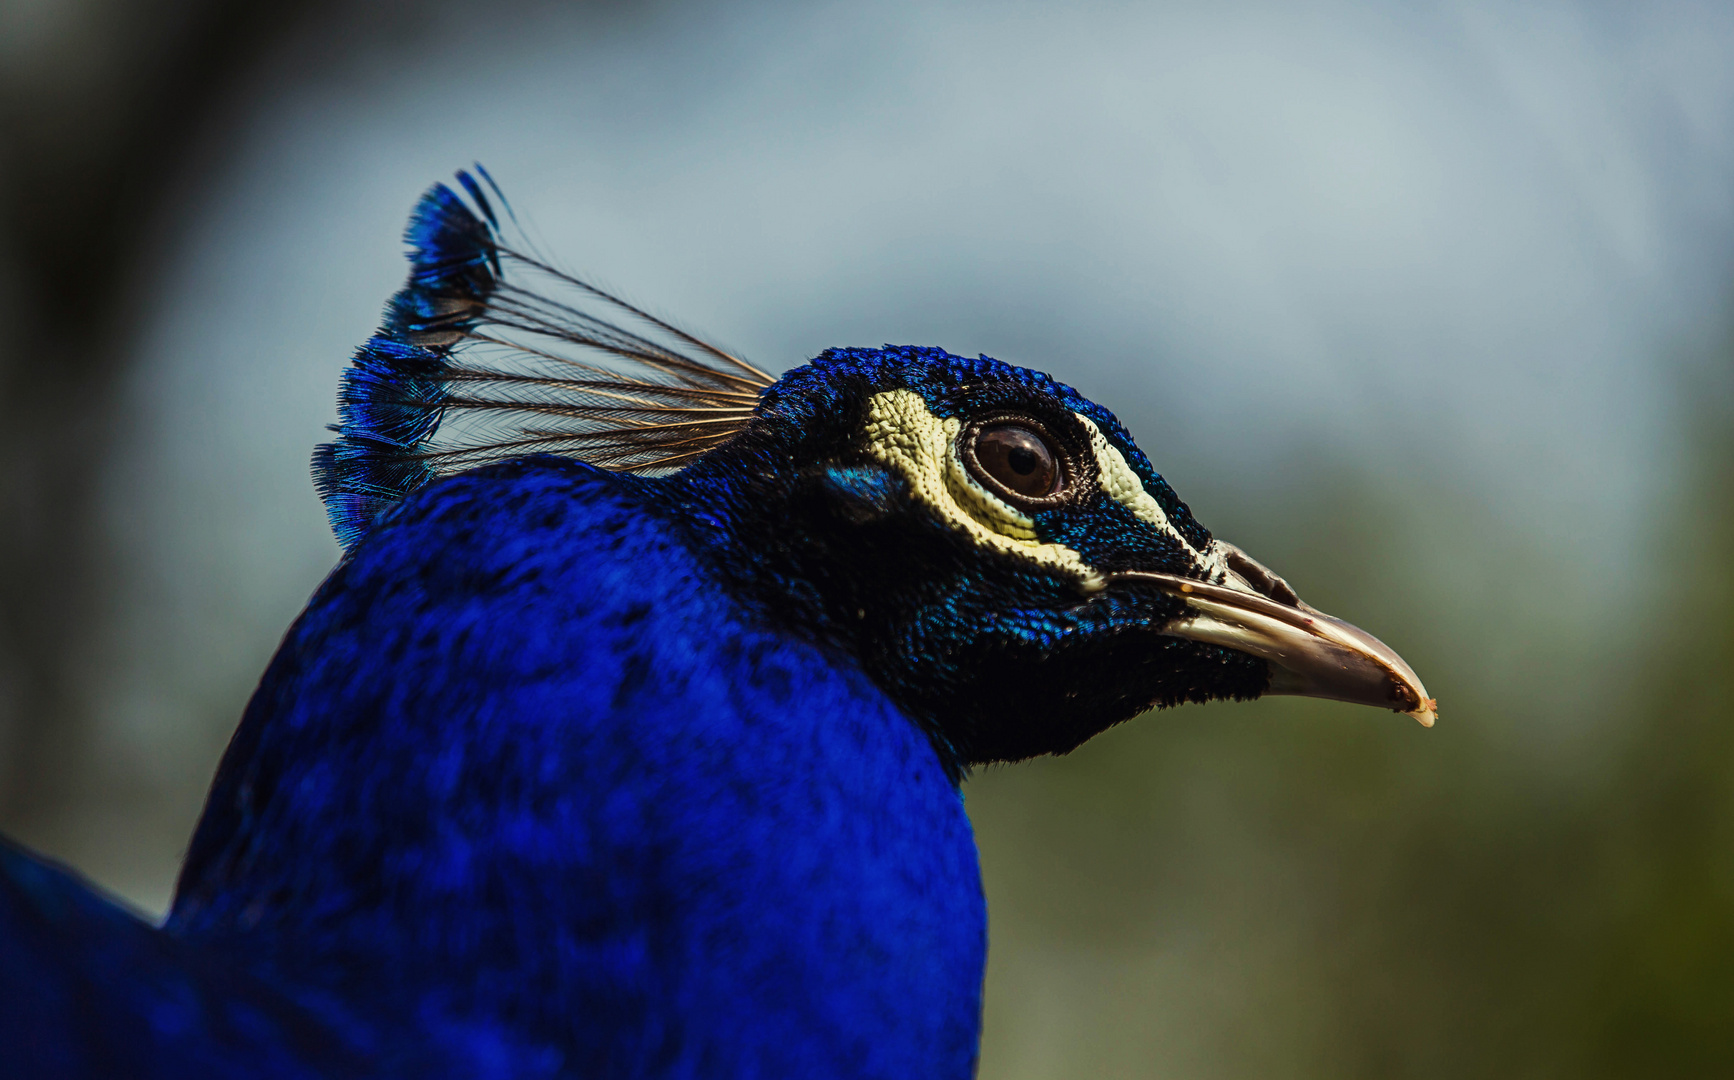 peacock close-up